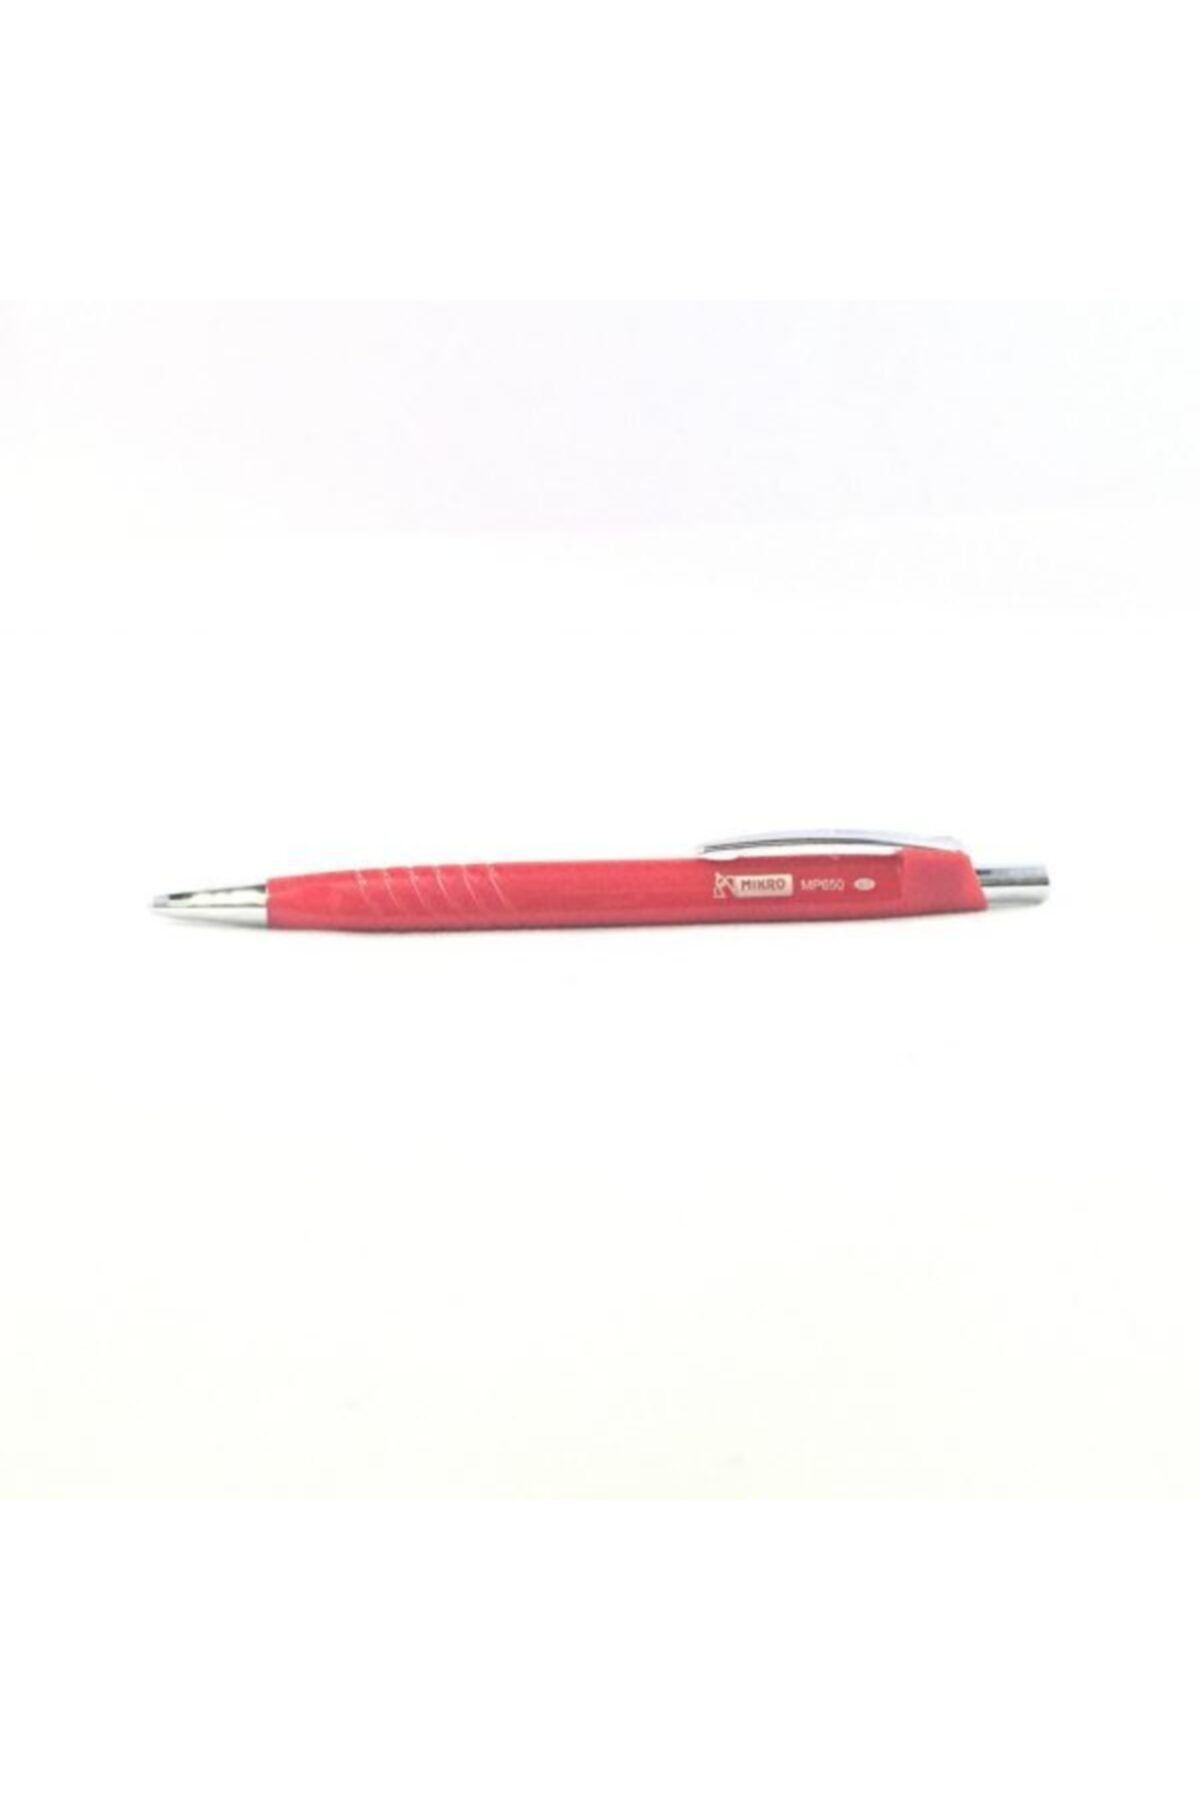 Mikro Versatil Kalem 0.7 Mm Mp-650 650vs 1 Adet Karışık Renklerde